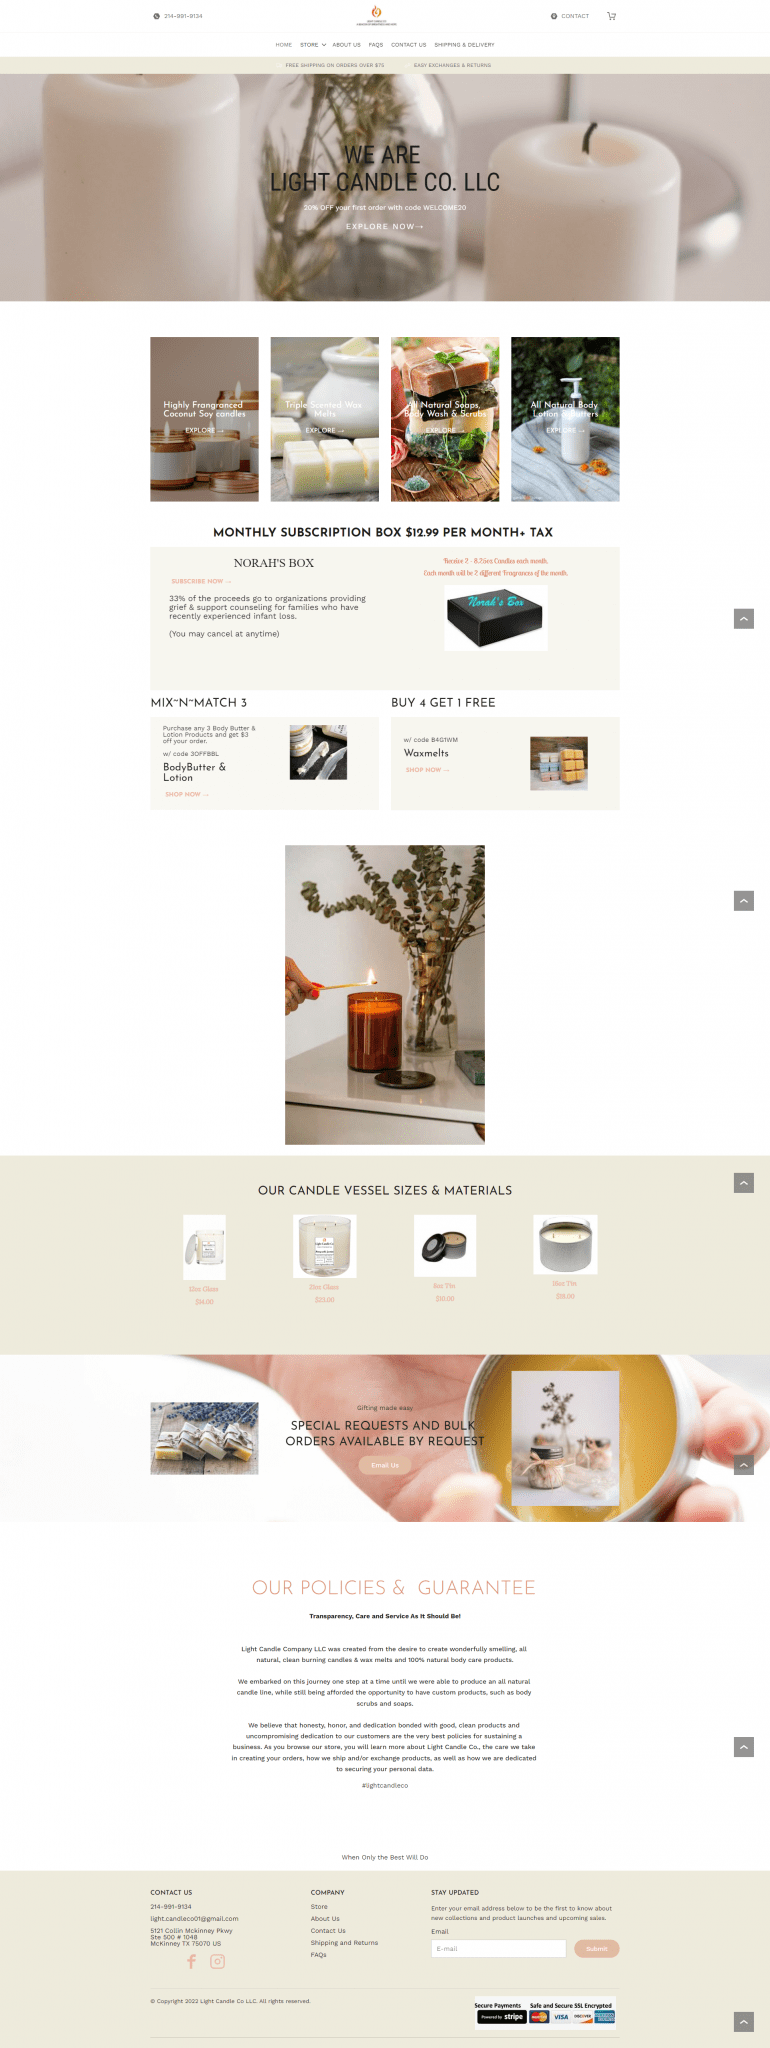 lightcandleco-net-wix-website-design-from-1337-designers